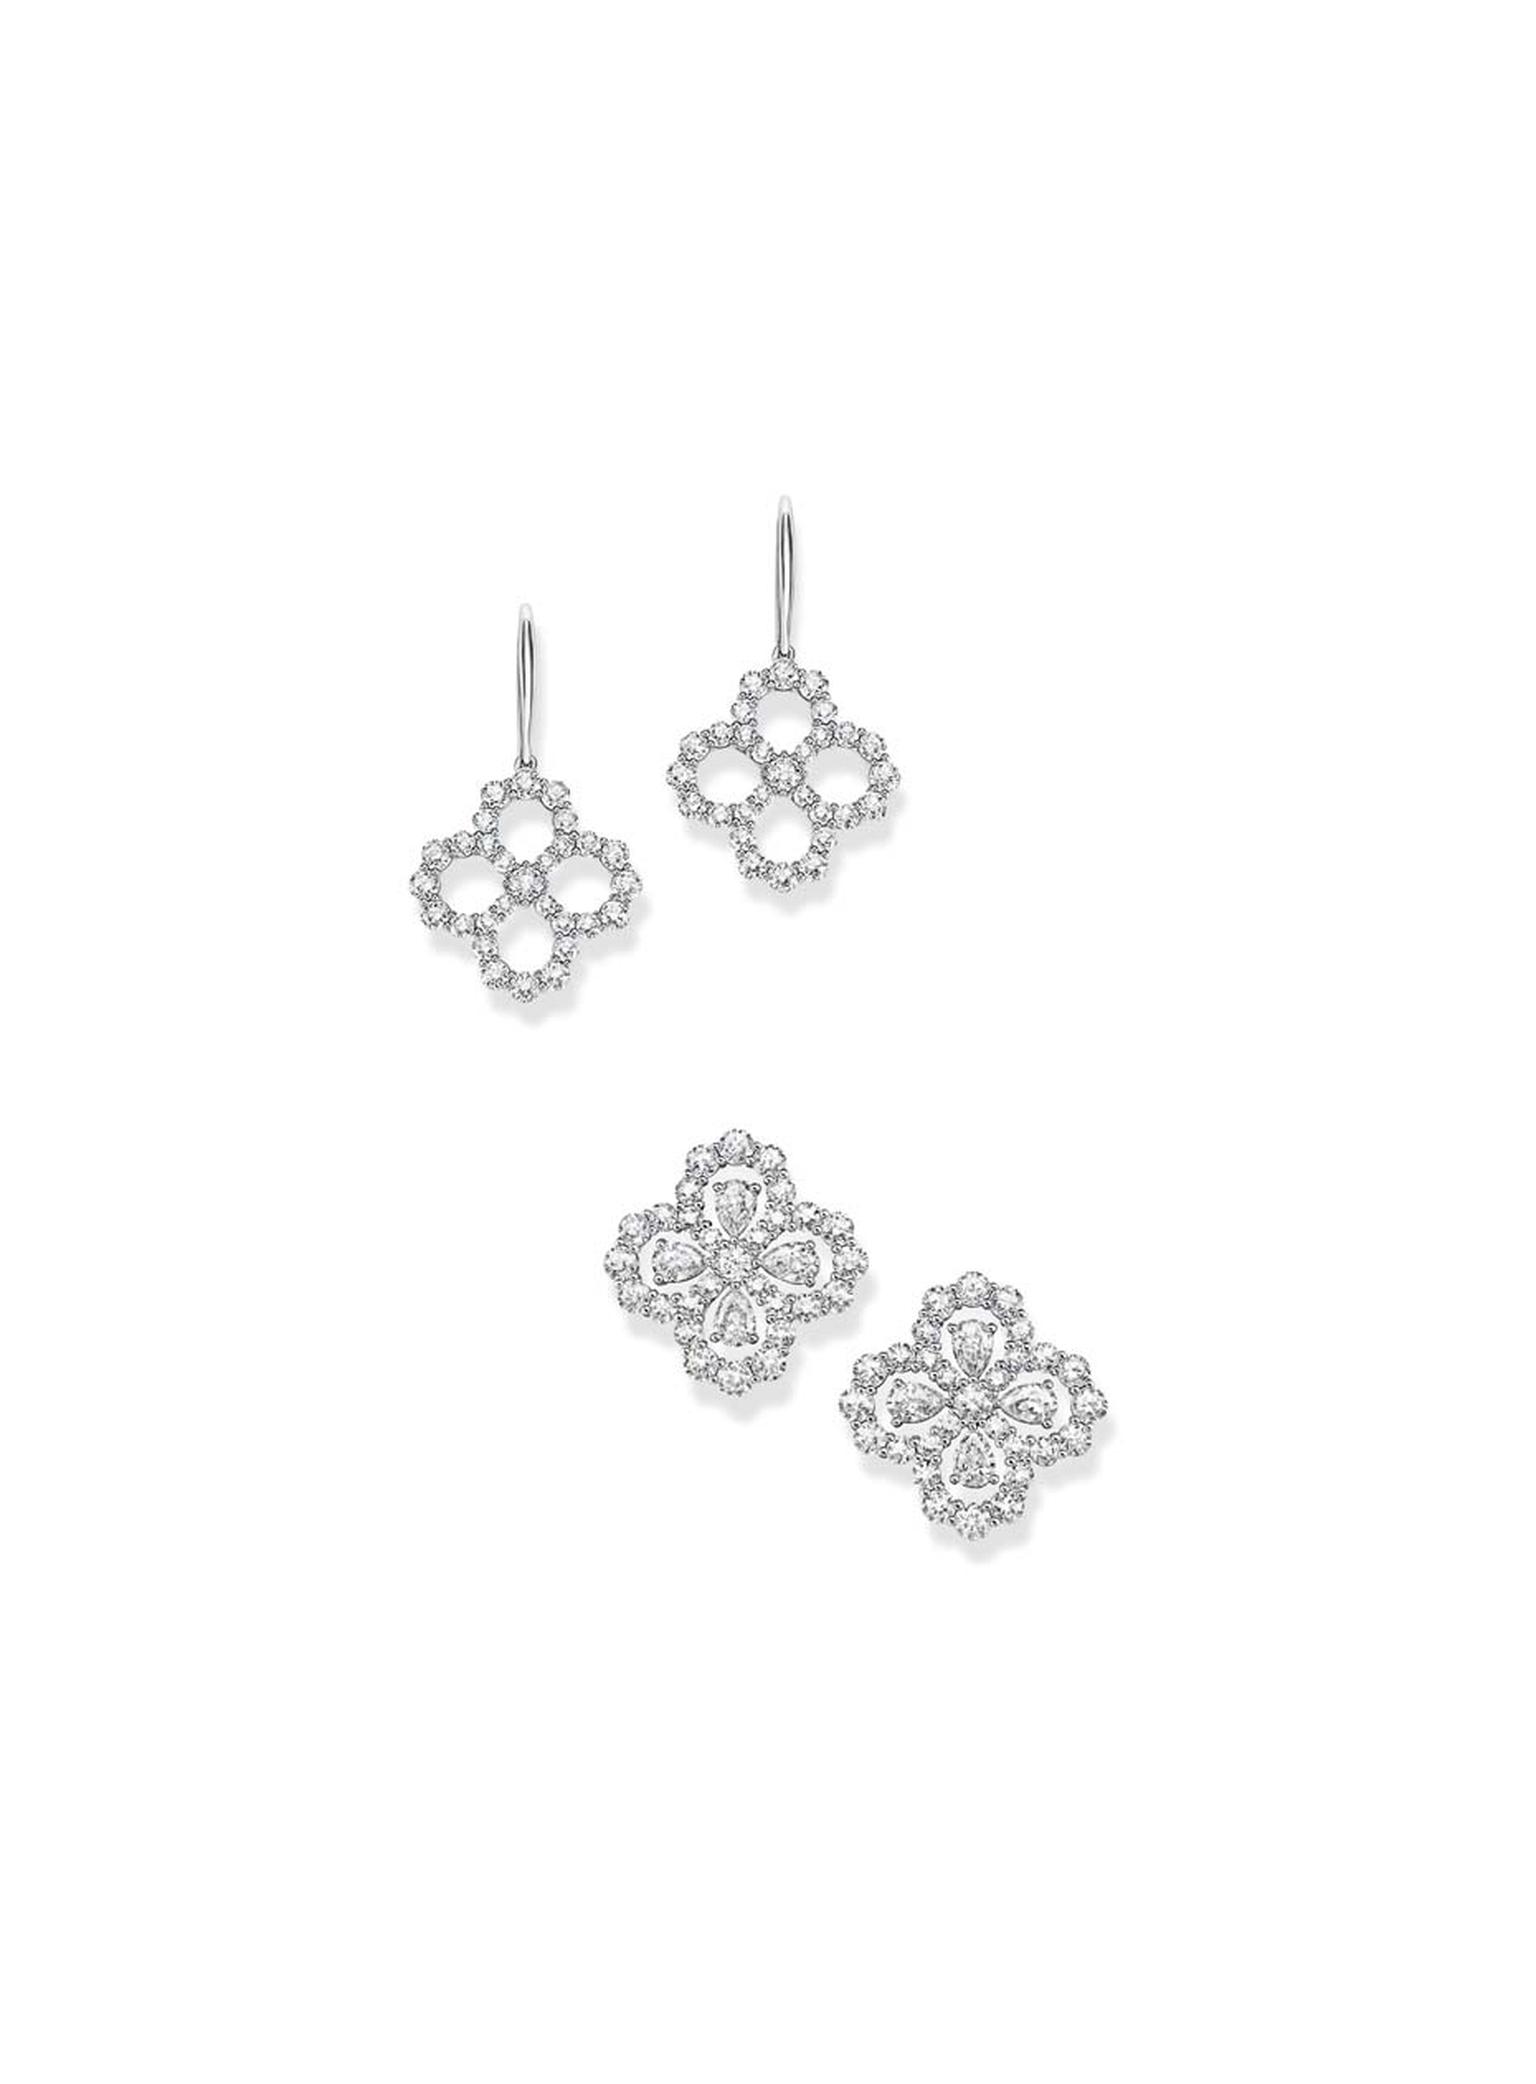 Harry Winston platinum Diamond Loop collection earrings.